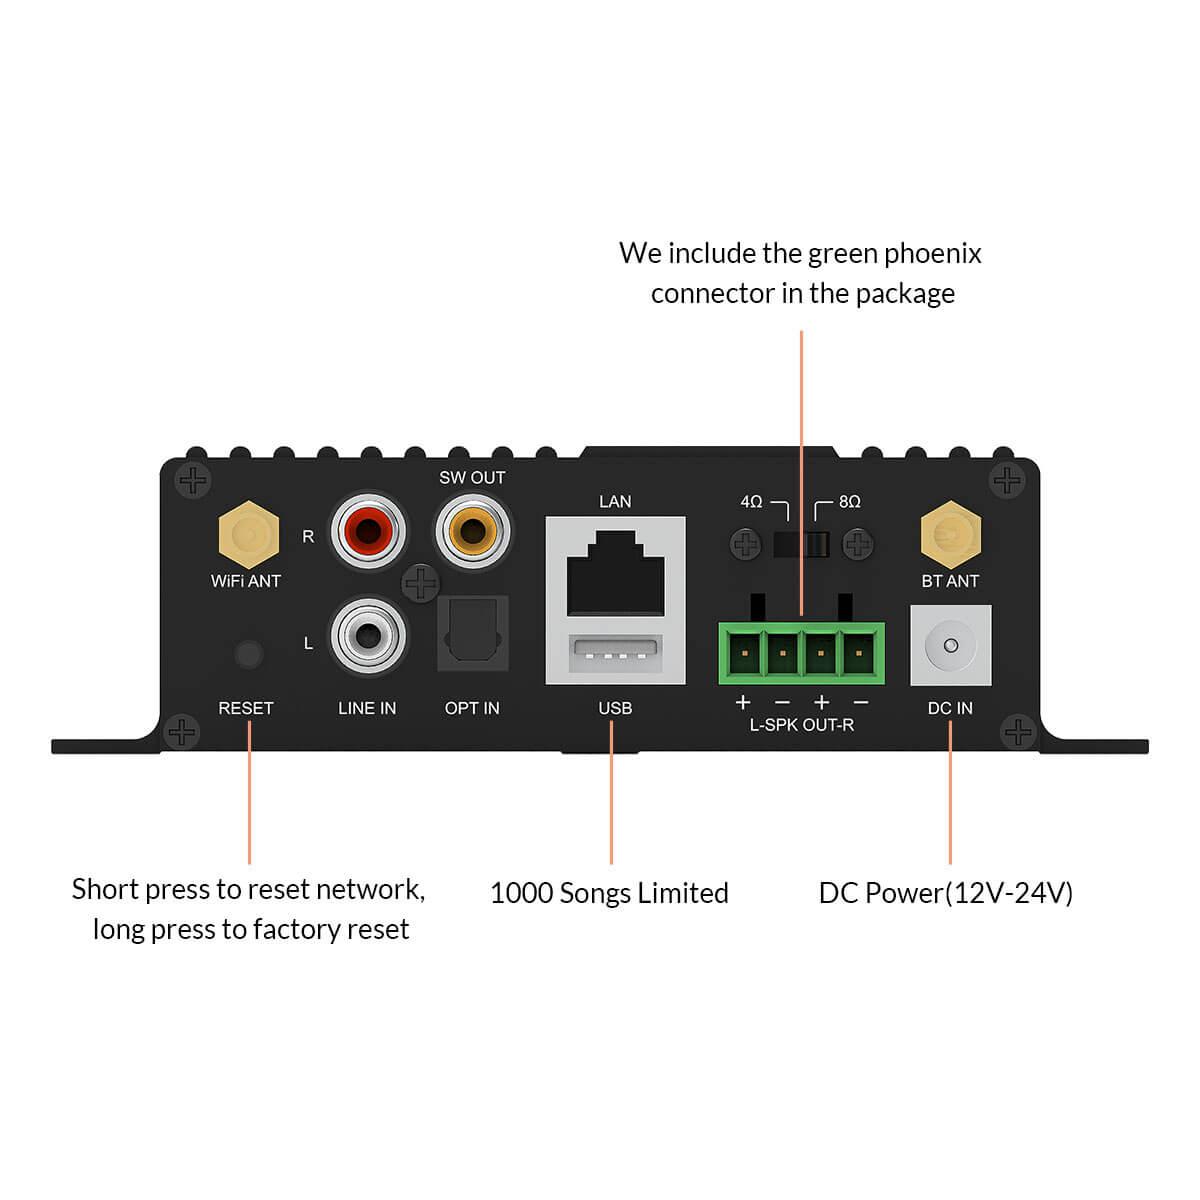 Amplificador Digital AAT PMR-13 G2 Multiroom 2 Zonas c/ 1 Streamer Wi-Fi -  ELETROHALEN - Loja Especializada em Áudio